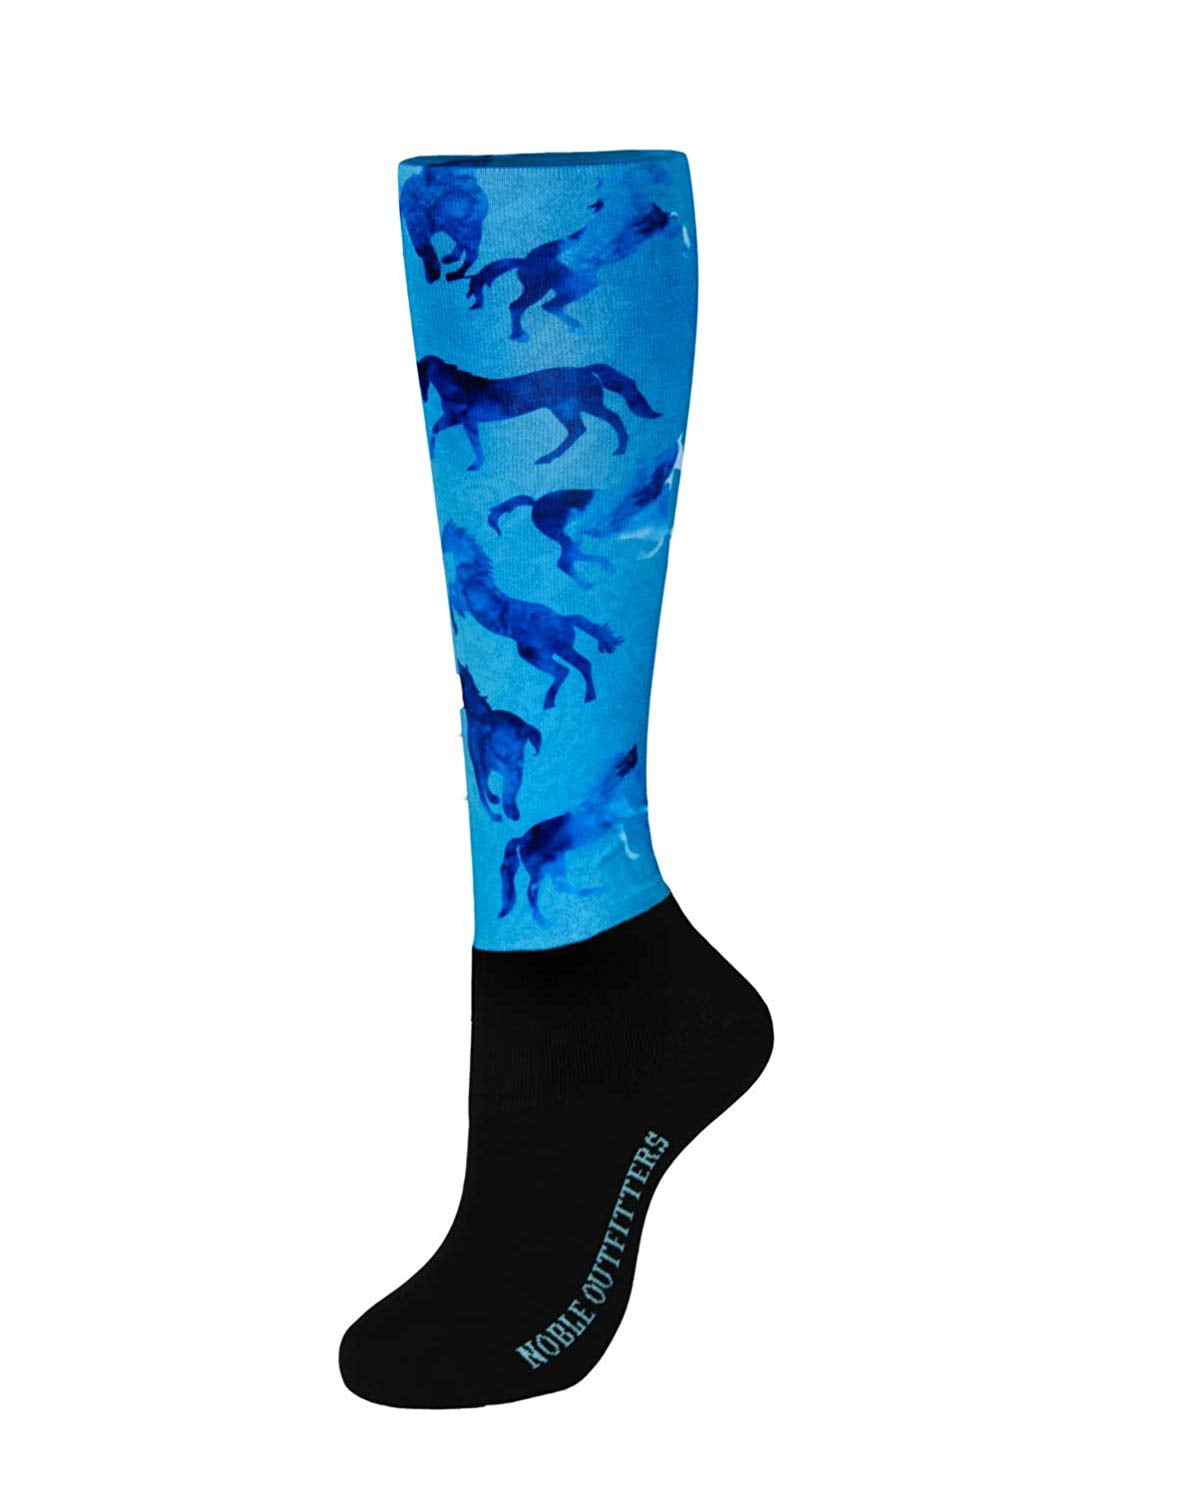 Noble Outfitters Peddies Socks Over the Calf Aqua Running Horses Blue Women's 